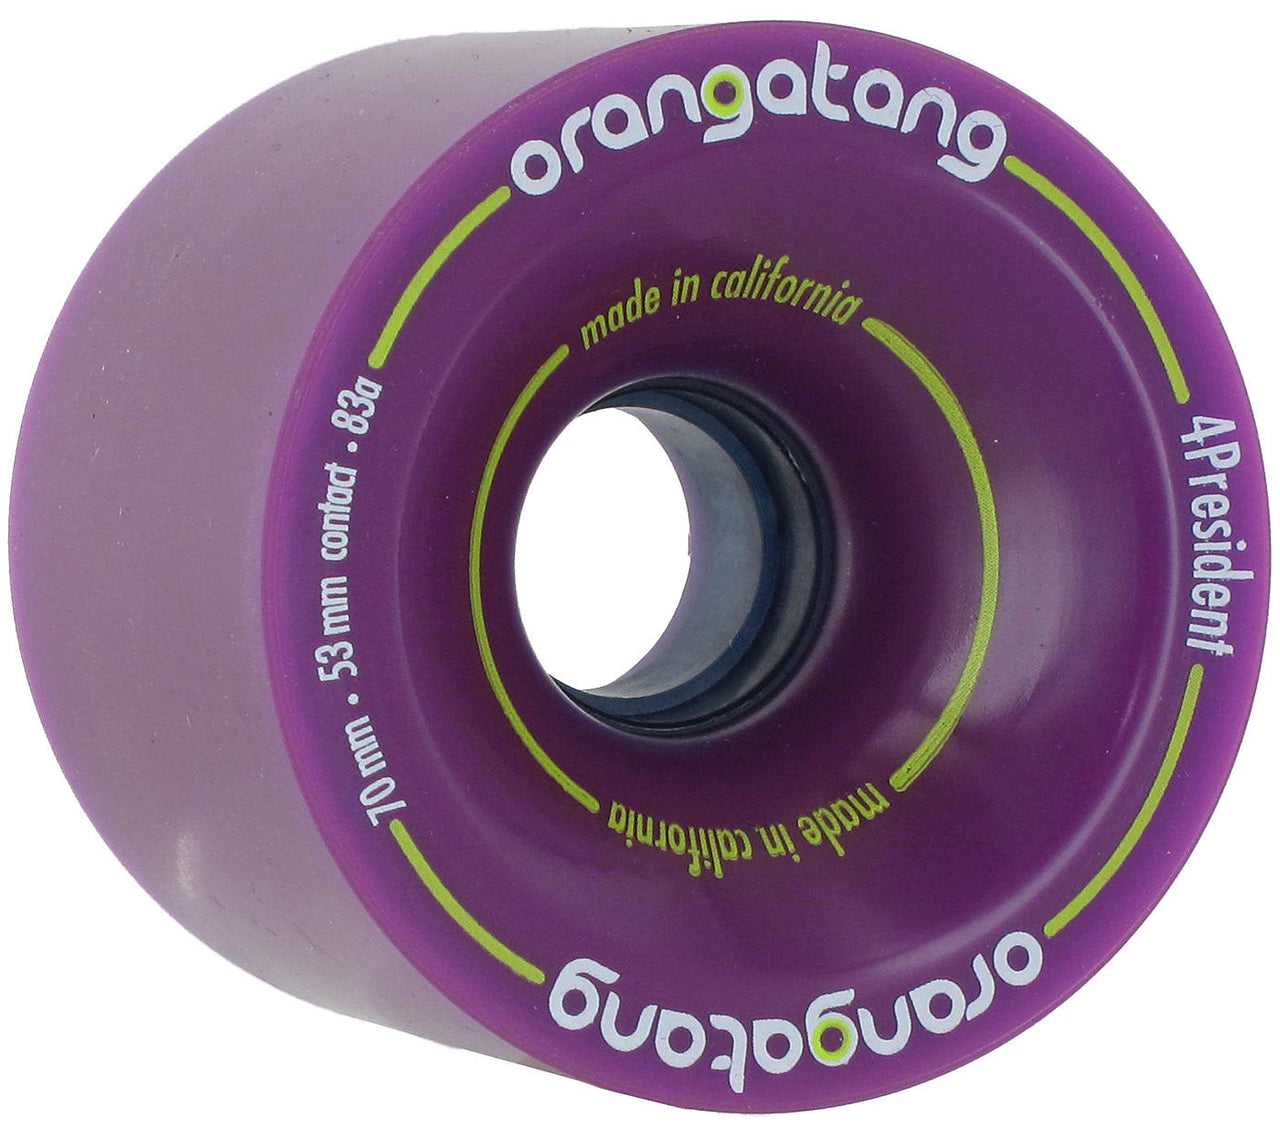 Orangatang 4 President Longboard Wheels 70mm 83a Purple image 1